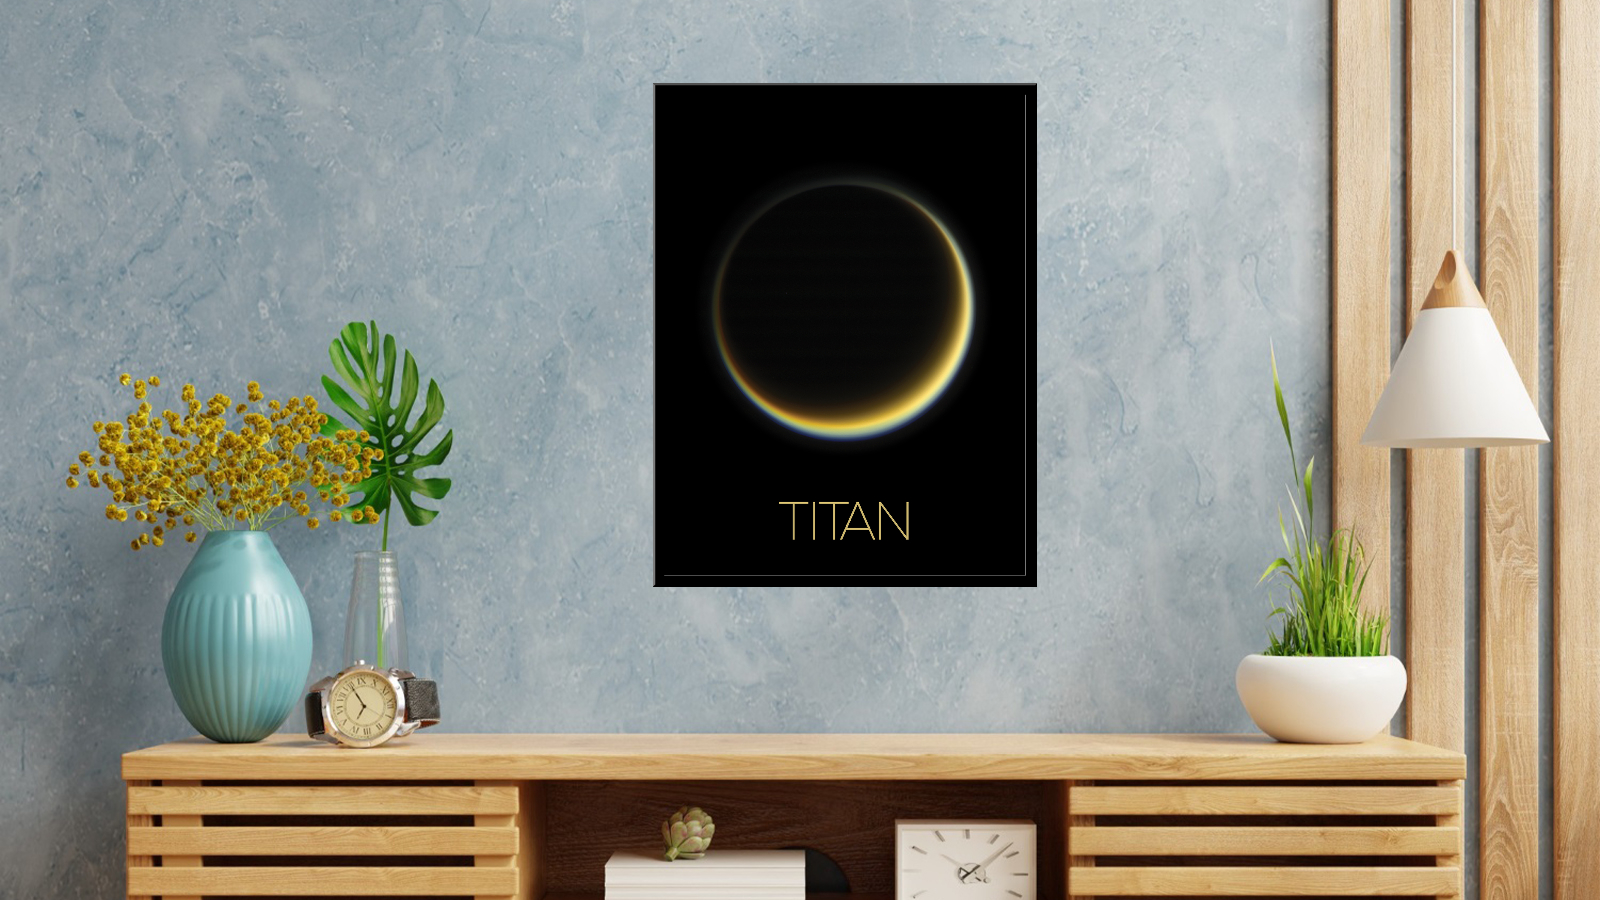 Titan's night side